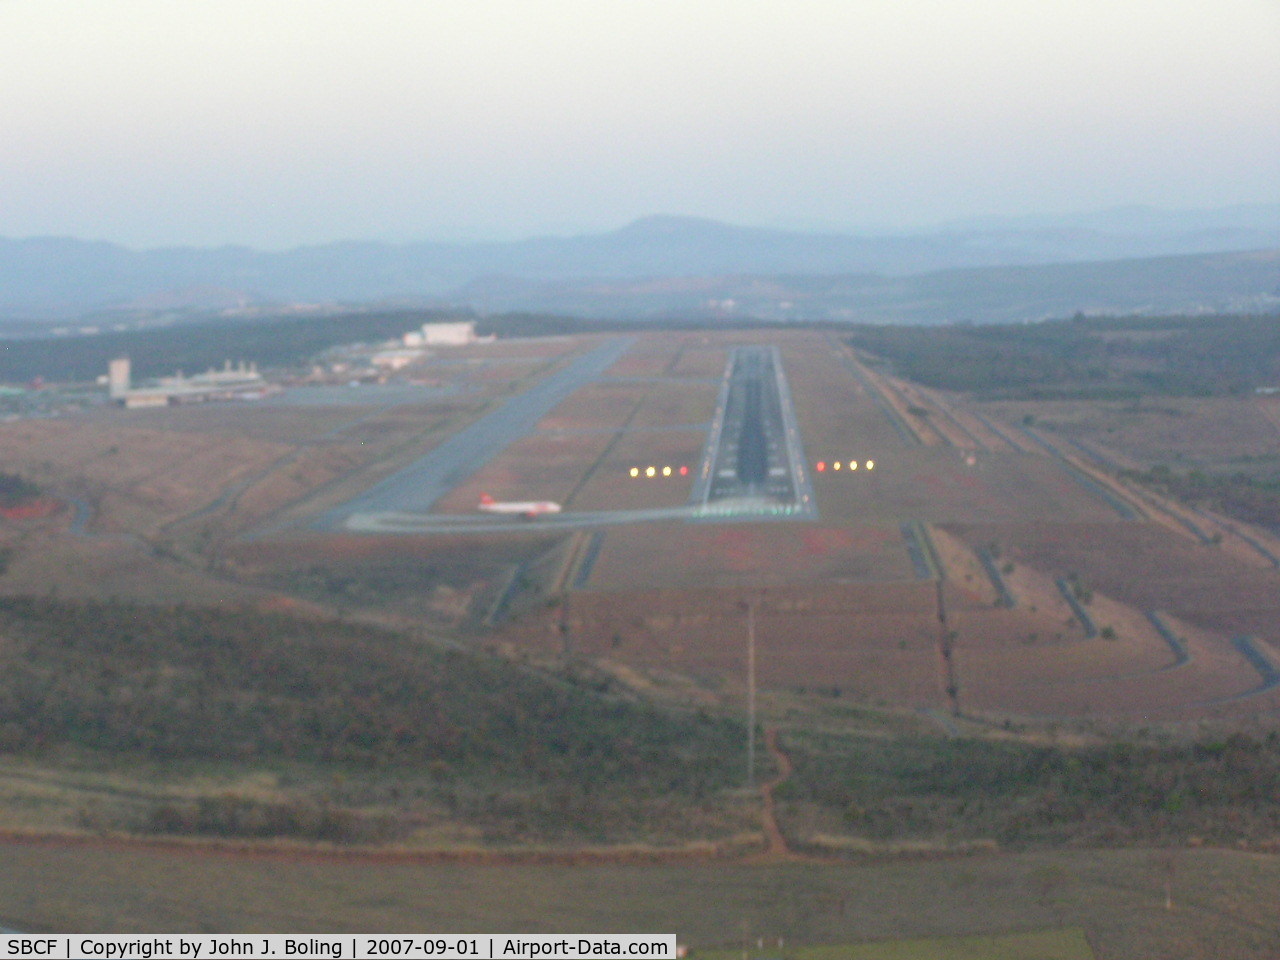 Tancredo Neves International Airport, Belo Horizonte, Minas Gerais Brazil (SBCF) - Short final to Belo Horizonte (CNF) from the front office of B767-300ER reg N279AN.